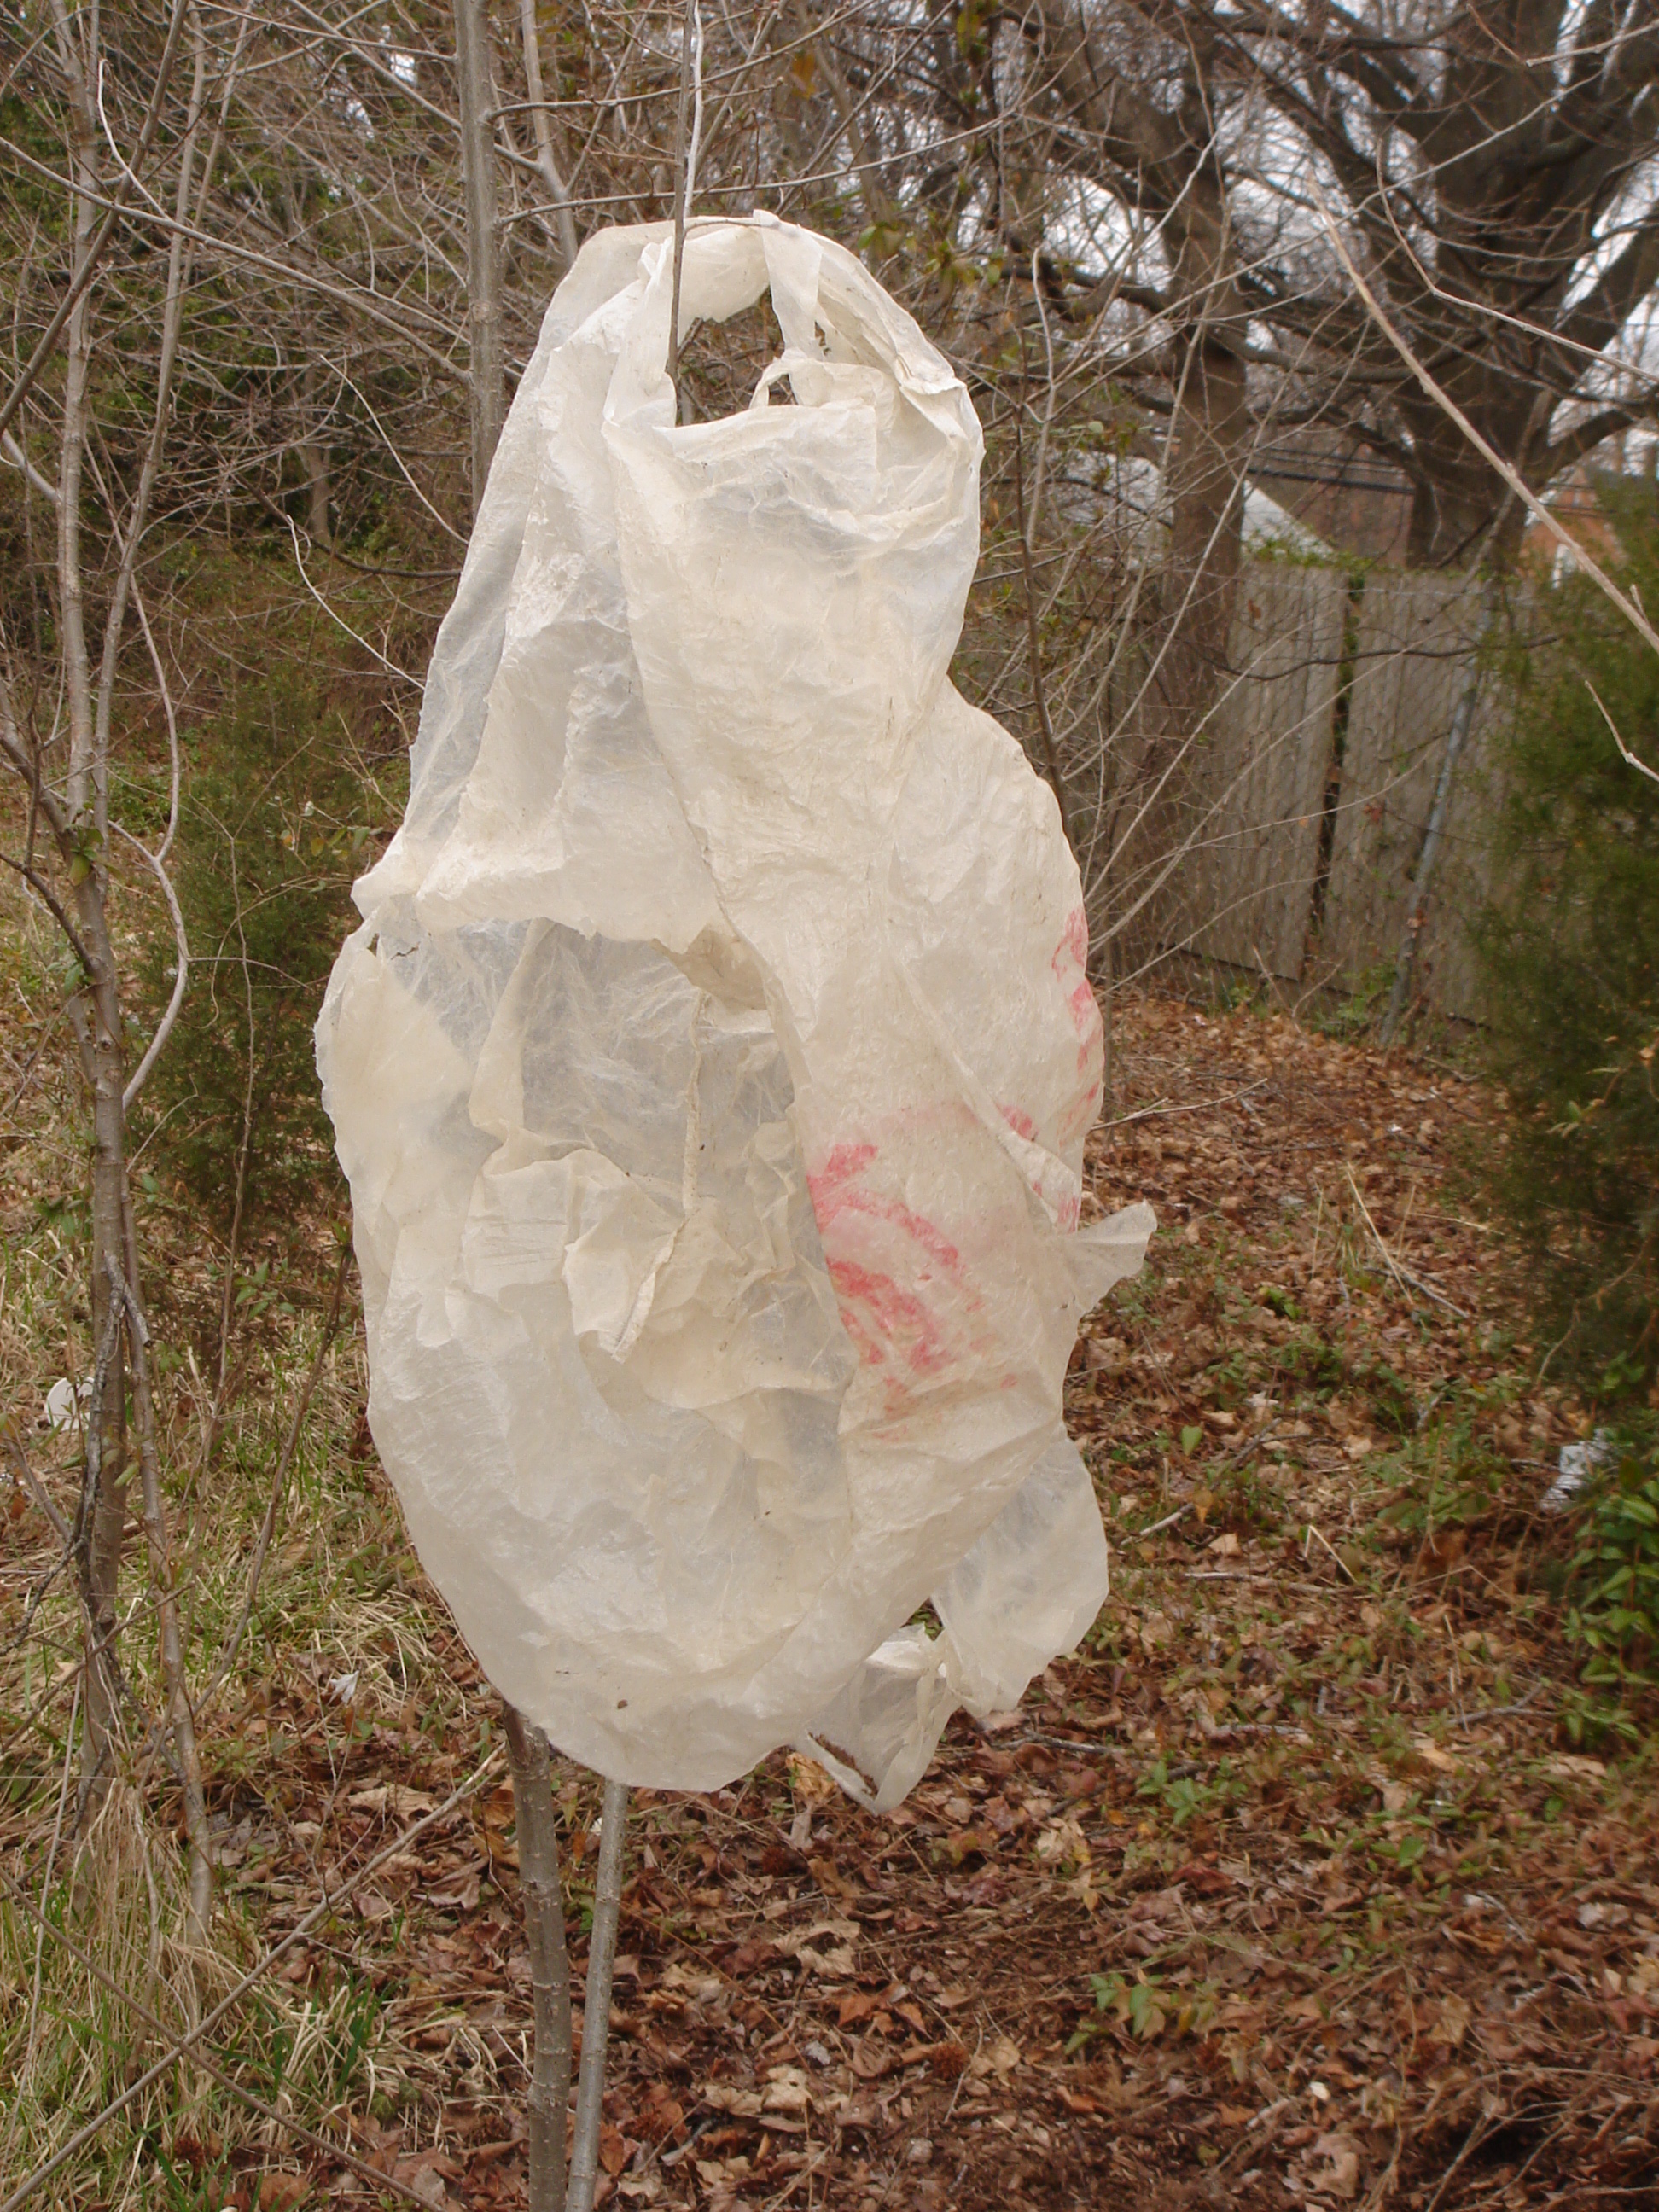 Plastic Bags 1